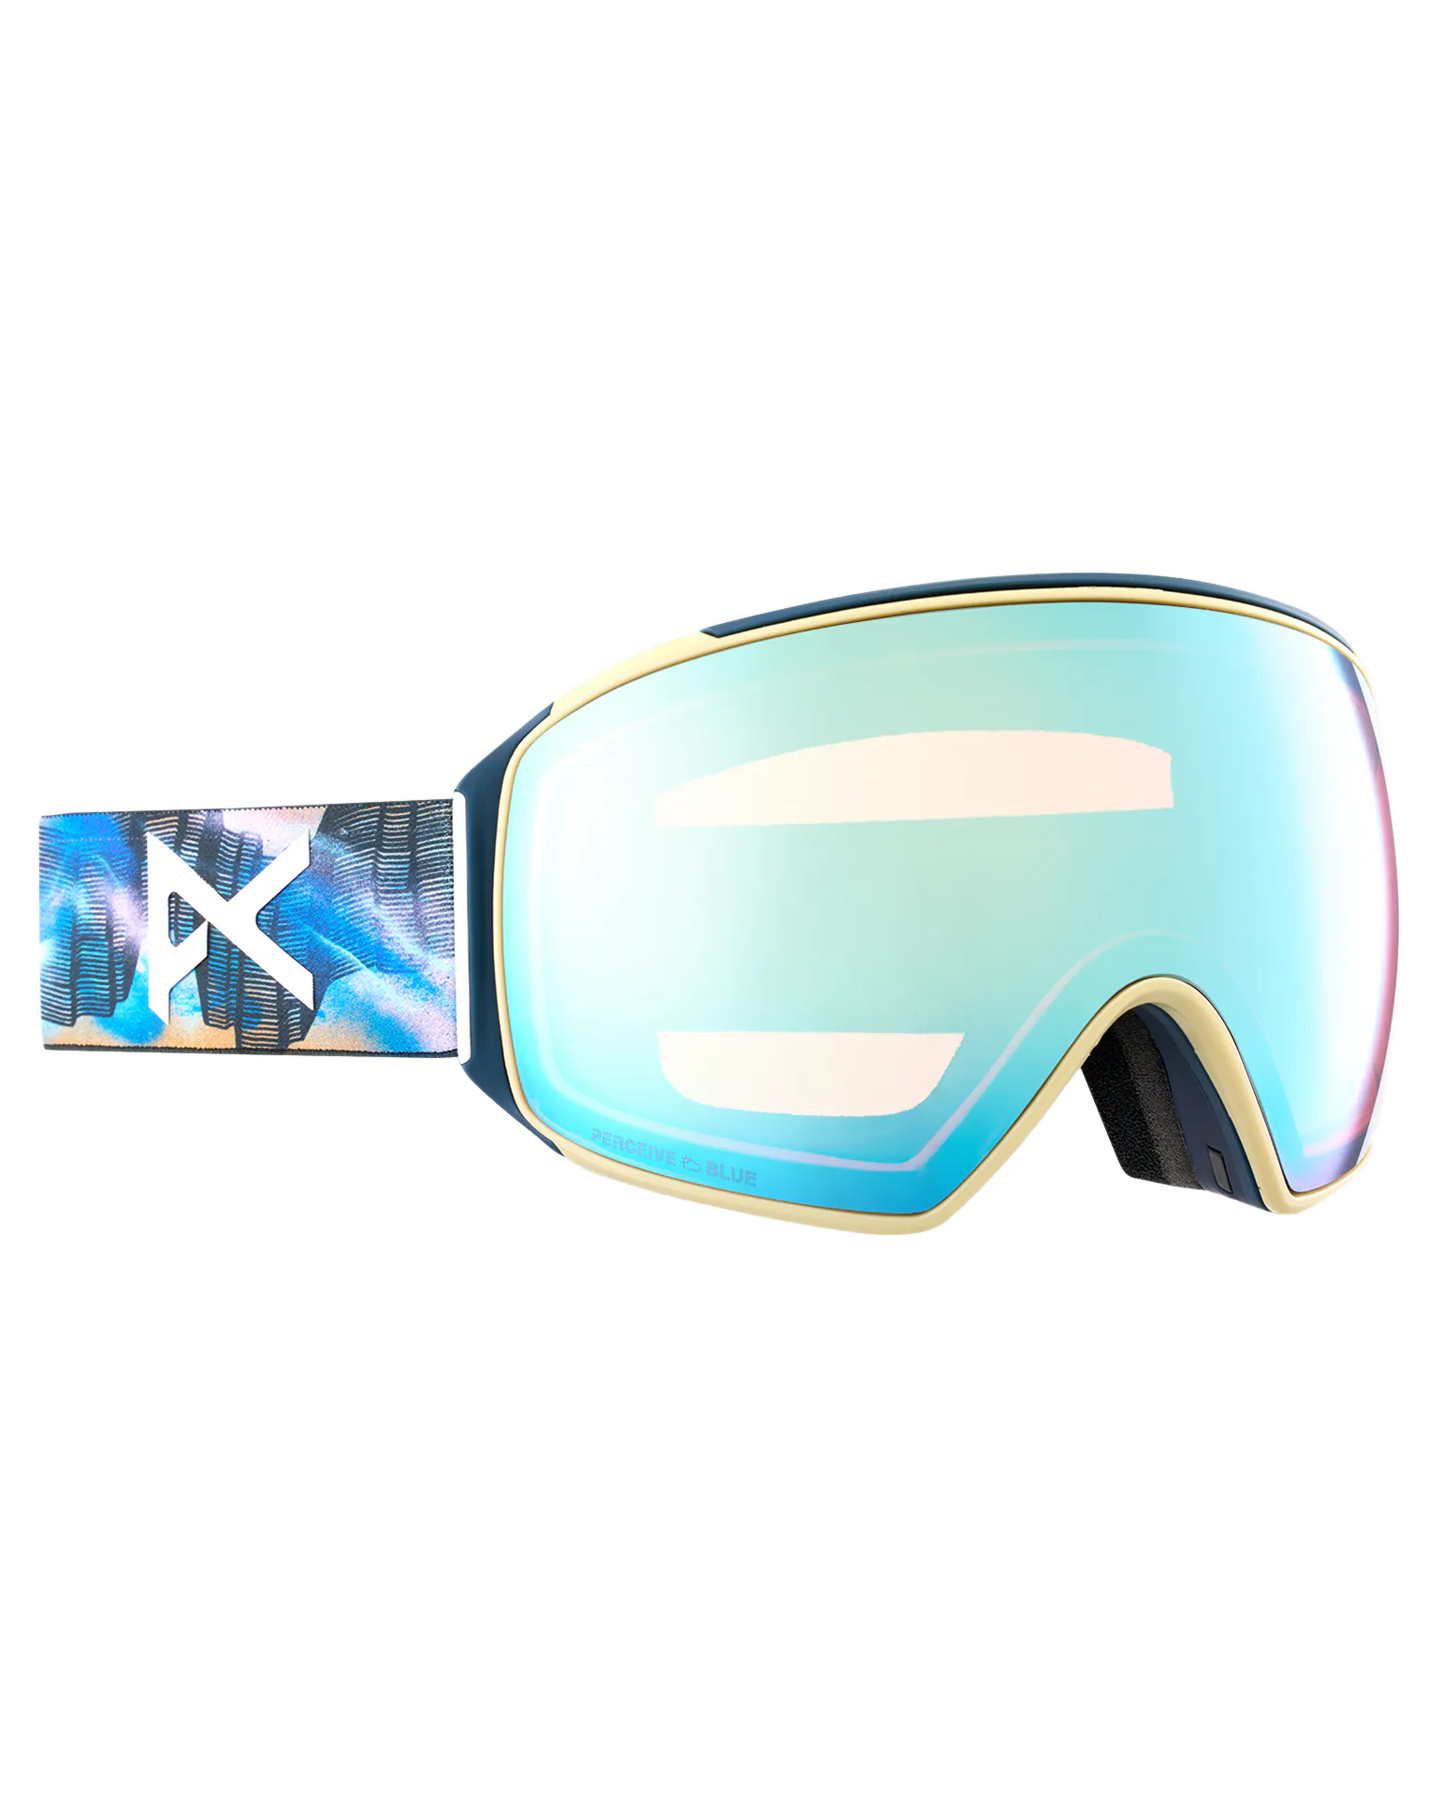 Anon M4 Toric Snow Goggles + Bonus Lens + Mfi® Face Mask - Chet Malinow/Perceive Variable Blue Lens Snow Goggles - Mens - Trojan Wake Ski Snow